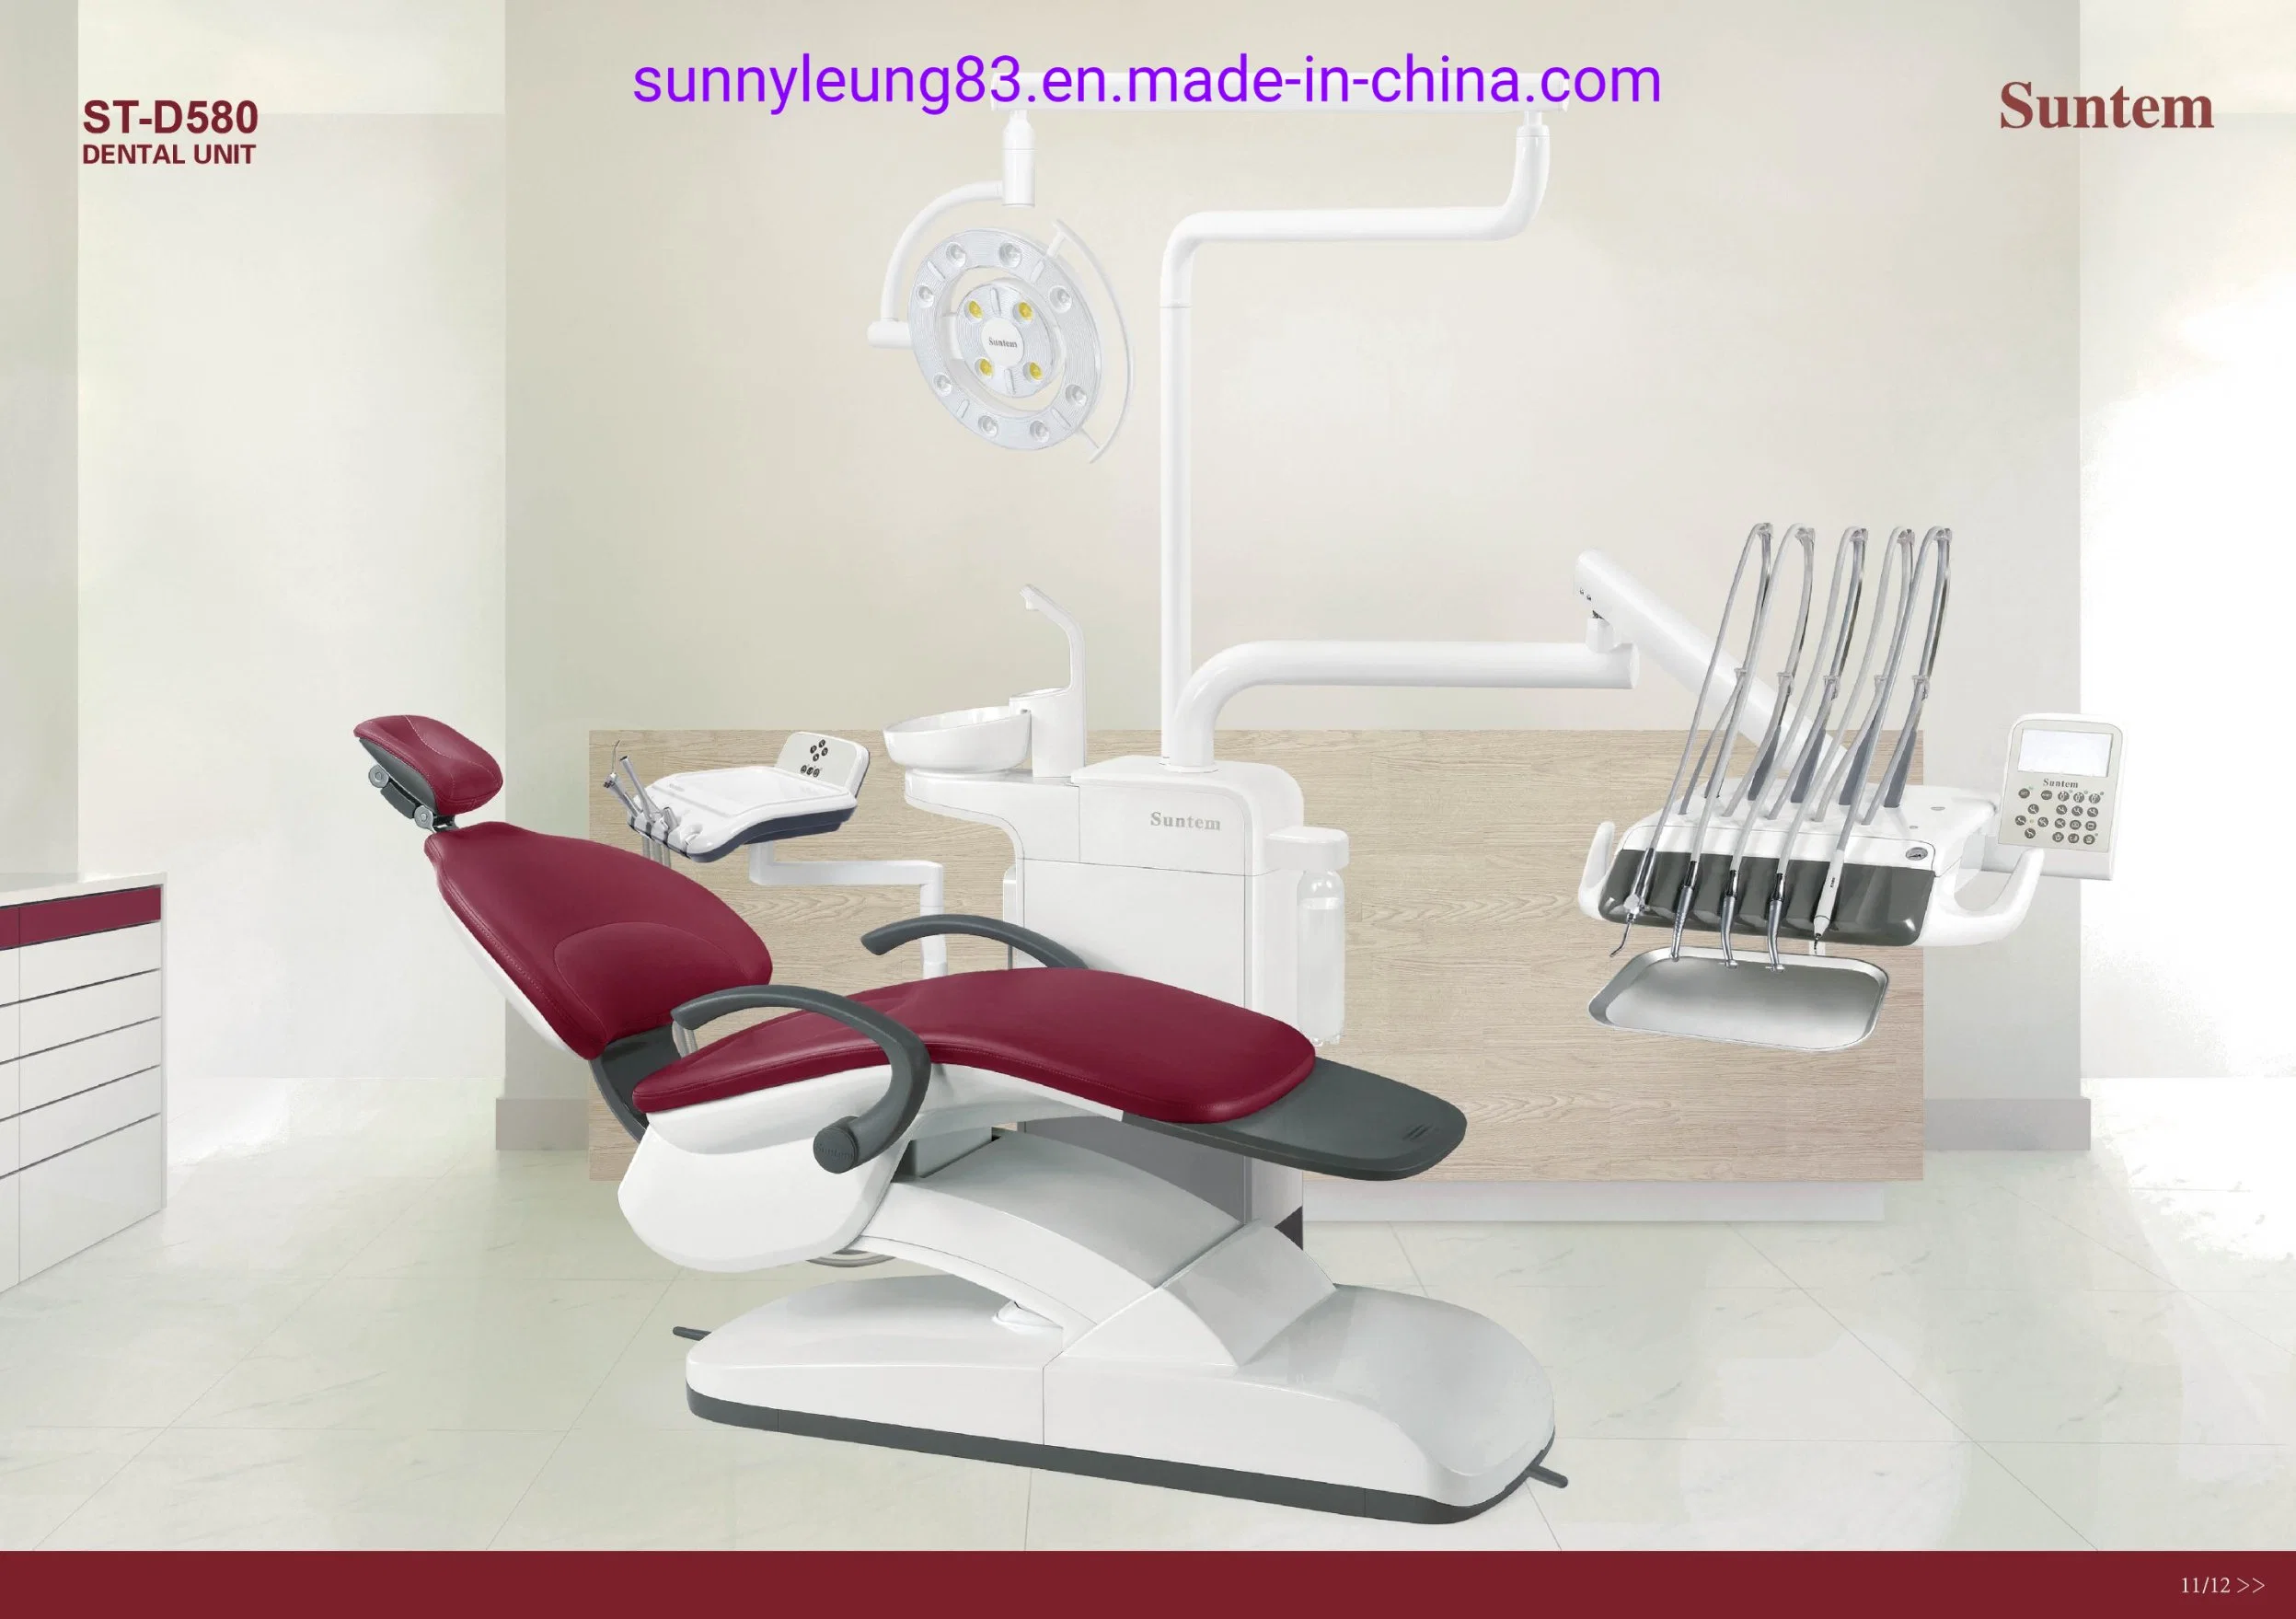 Suntem Dental Unit St-D580 with European Design/Dental Unit/Luxury Dental Chair